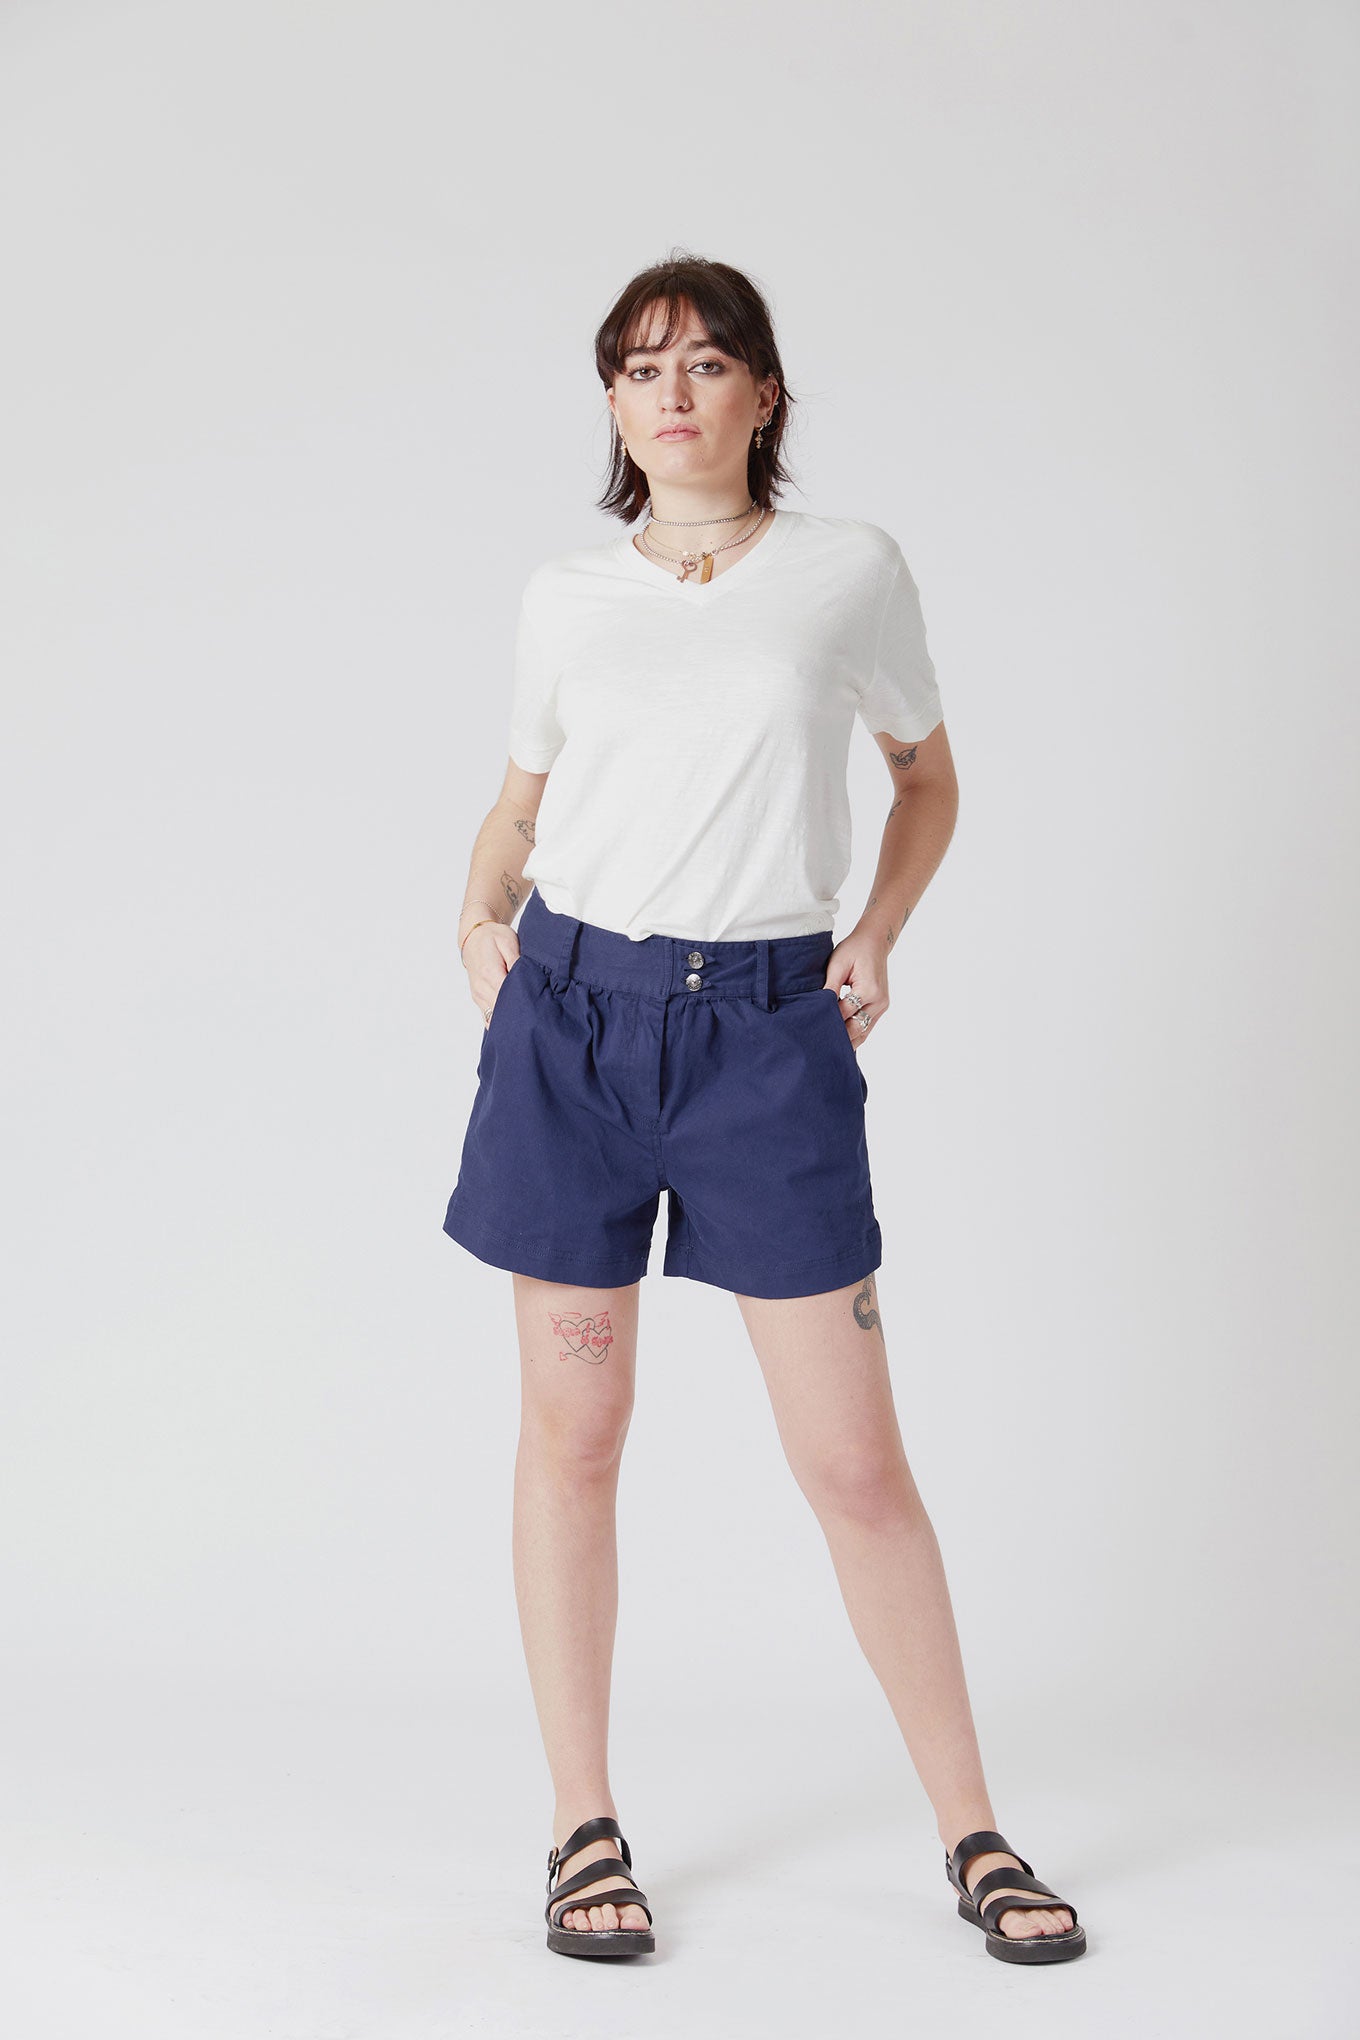 LILY Organic Cotton Shorts Navy, SIZE 1 / UK 8 / EUR 36